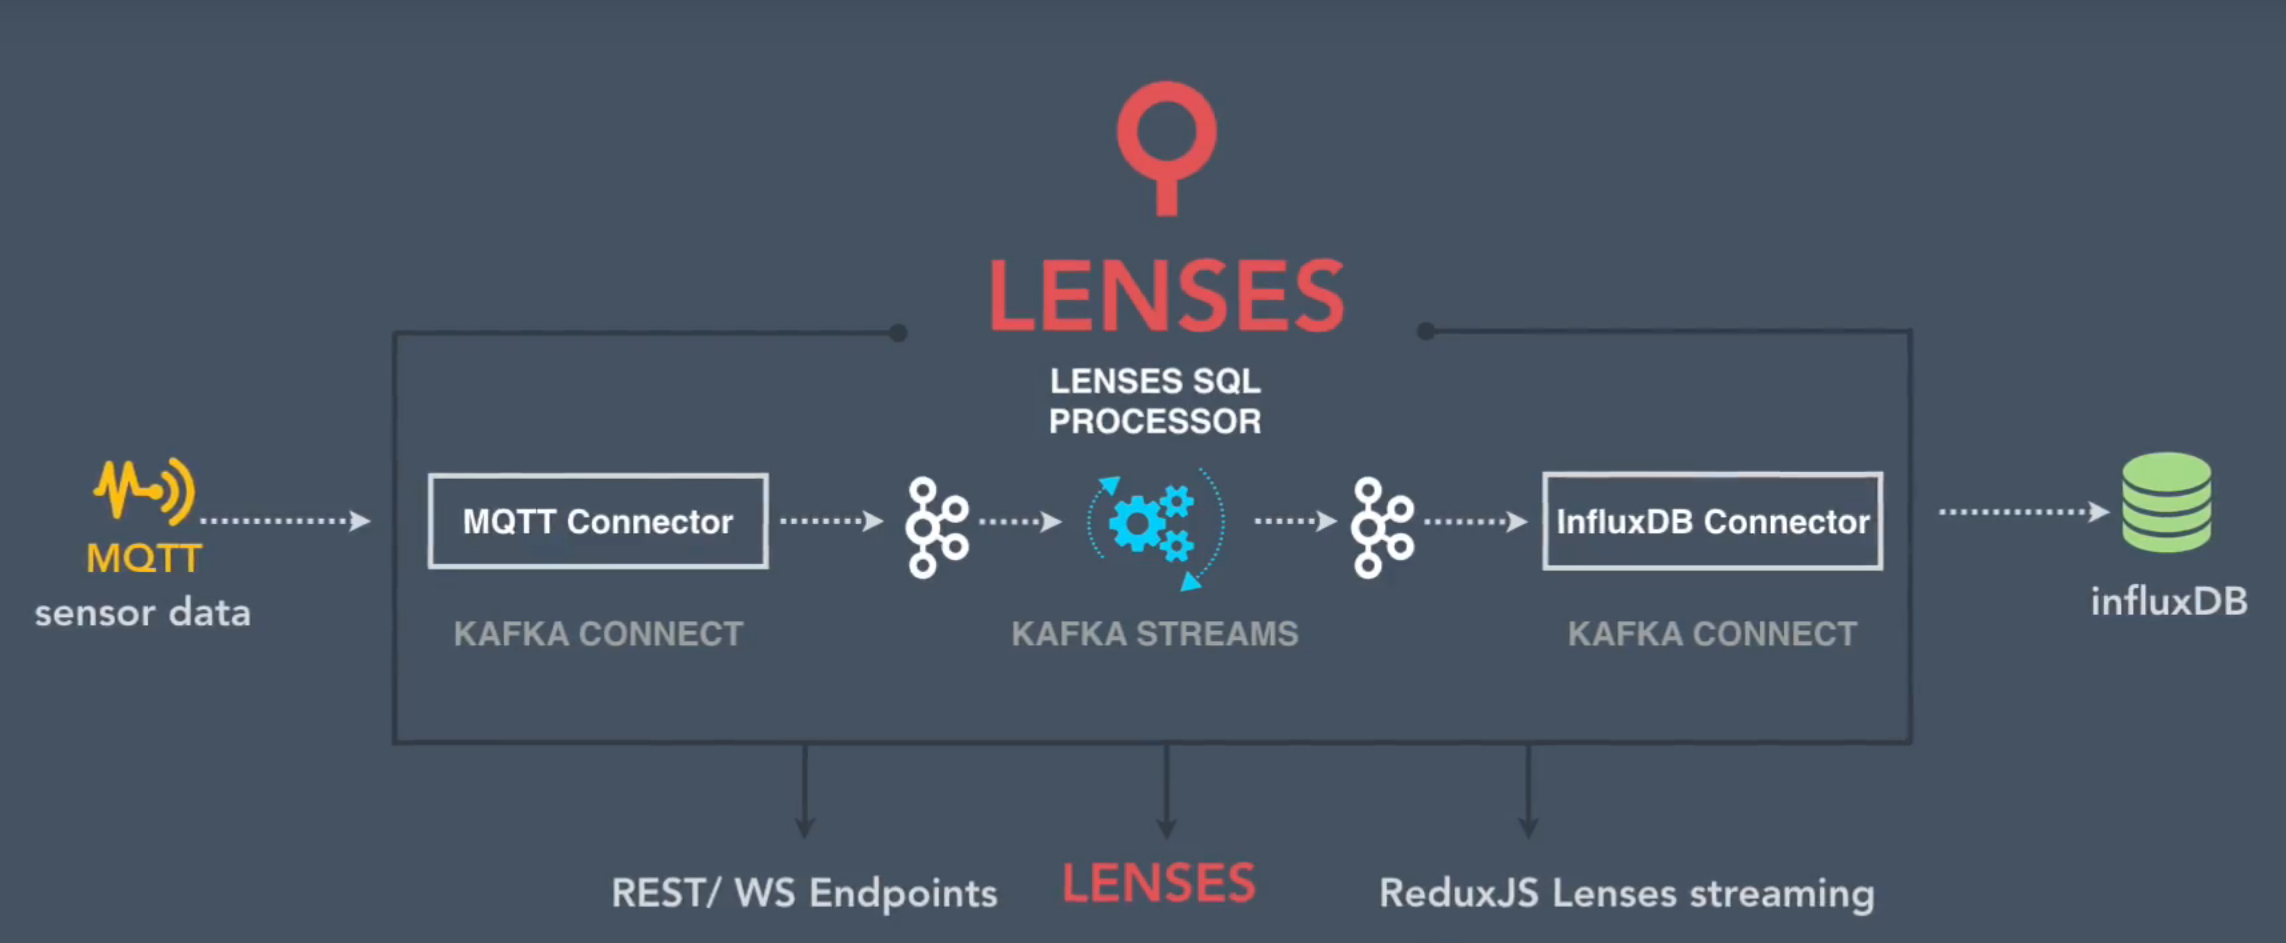 IoT with Kafka via Lenses